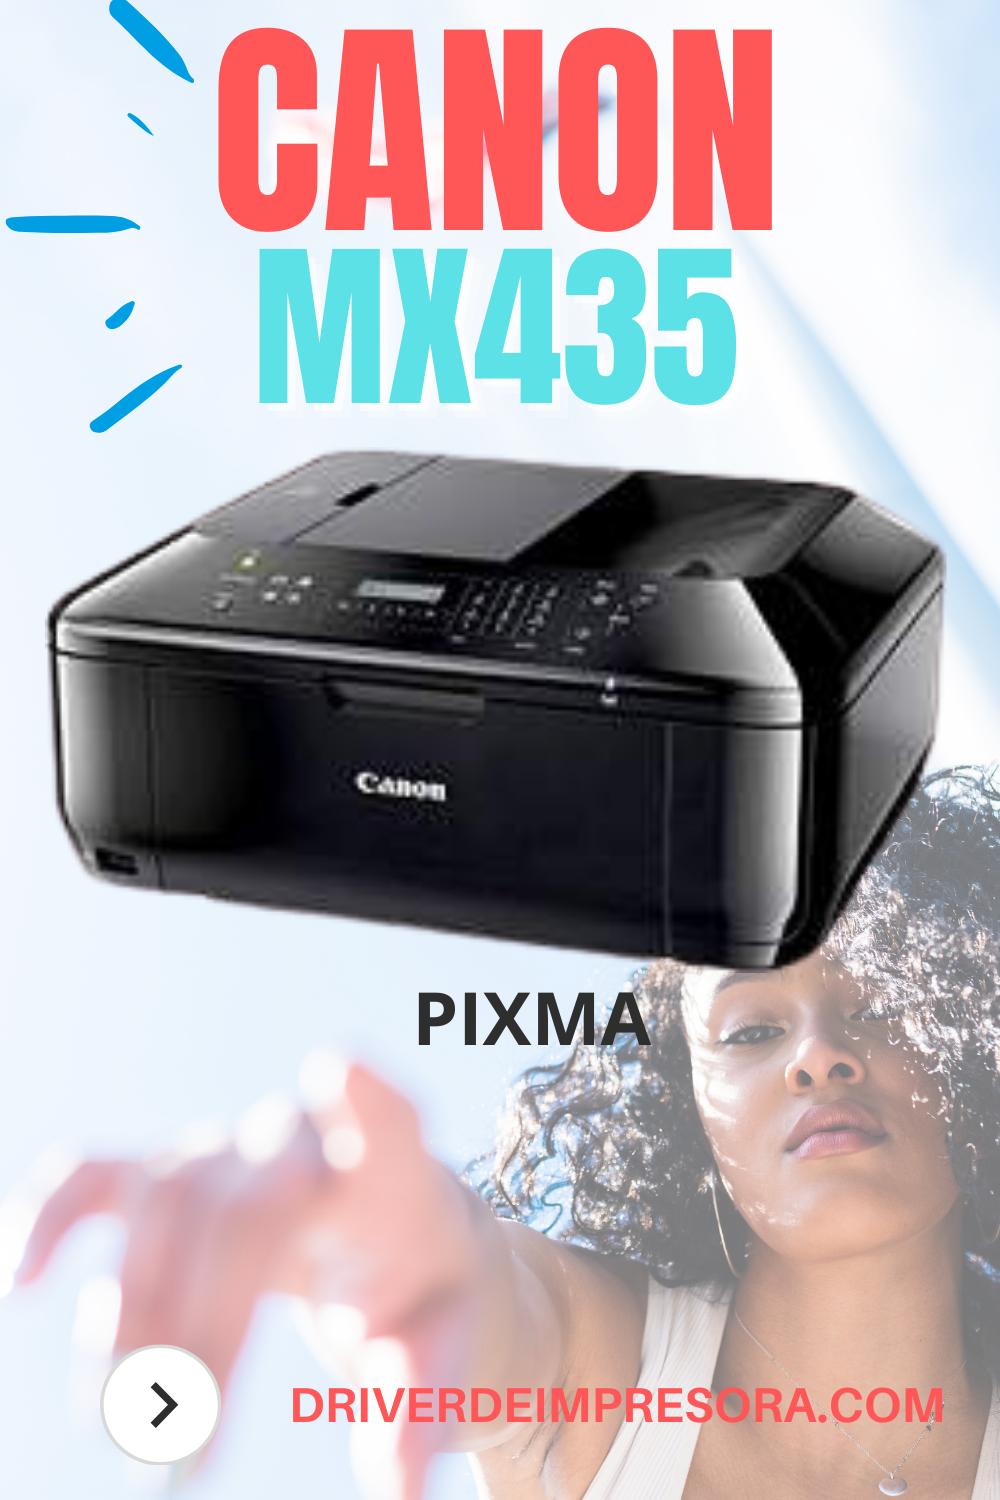 Drivers Impresora Canon Pixma MX435 Windows 10 / MAC